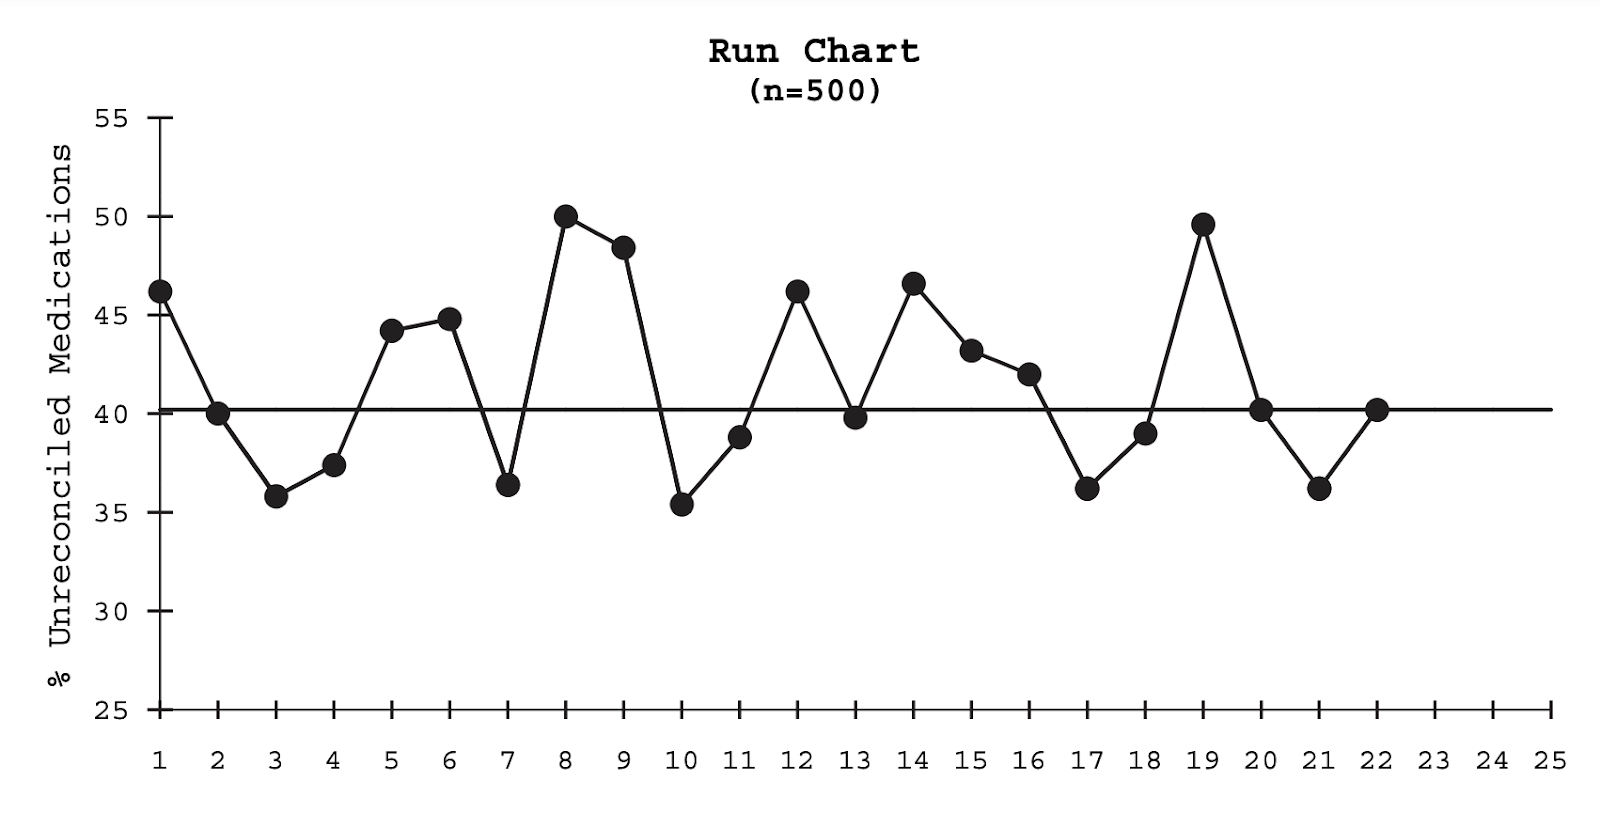 Run Chart: Creation, Analysis, & Rules